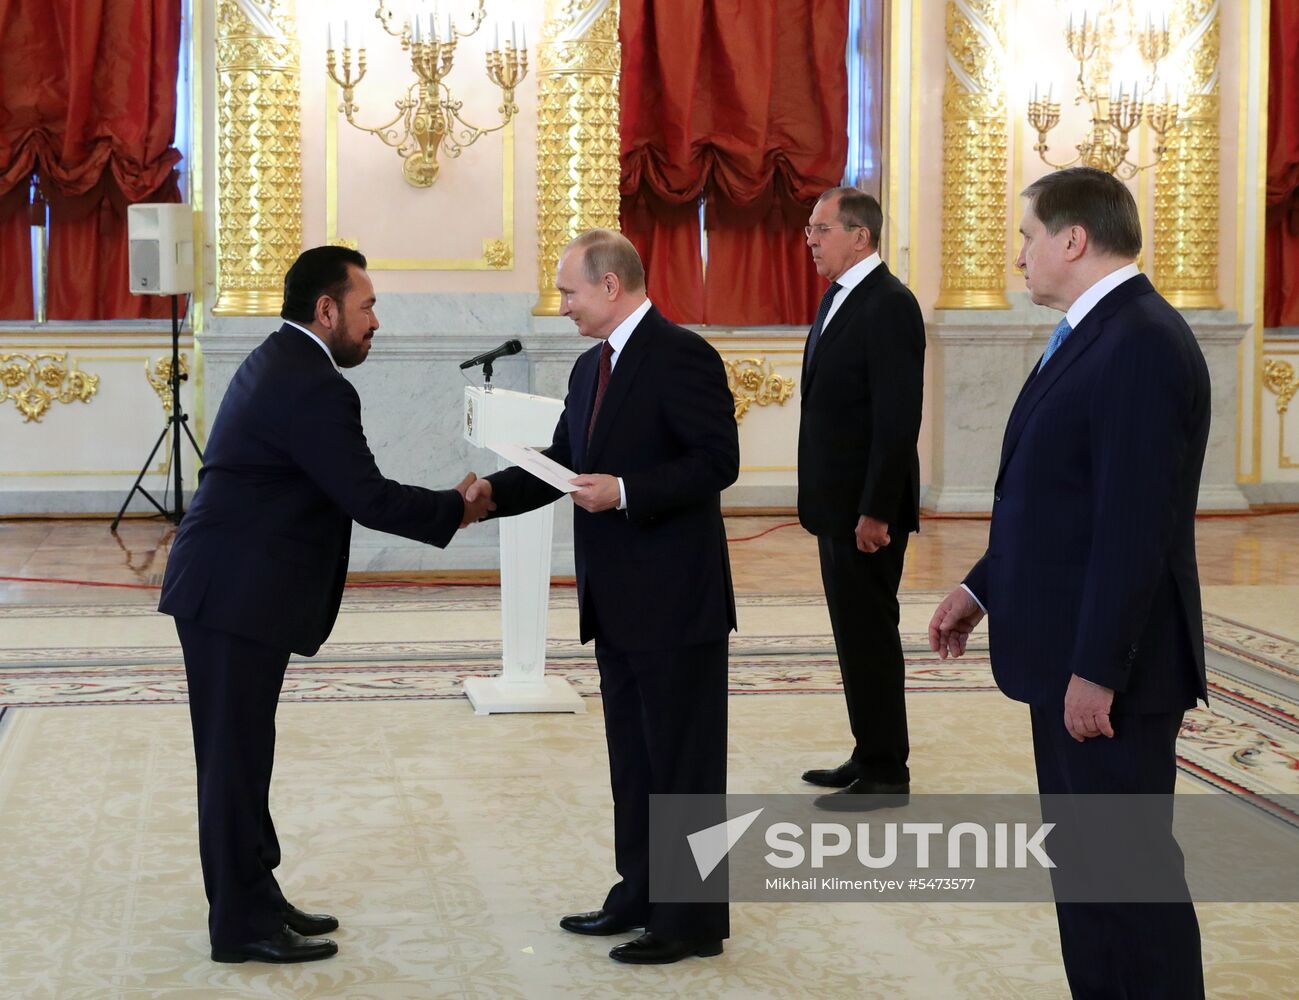 Russian President Vladimir Putin receives credentials from foreign ambassadors